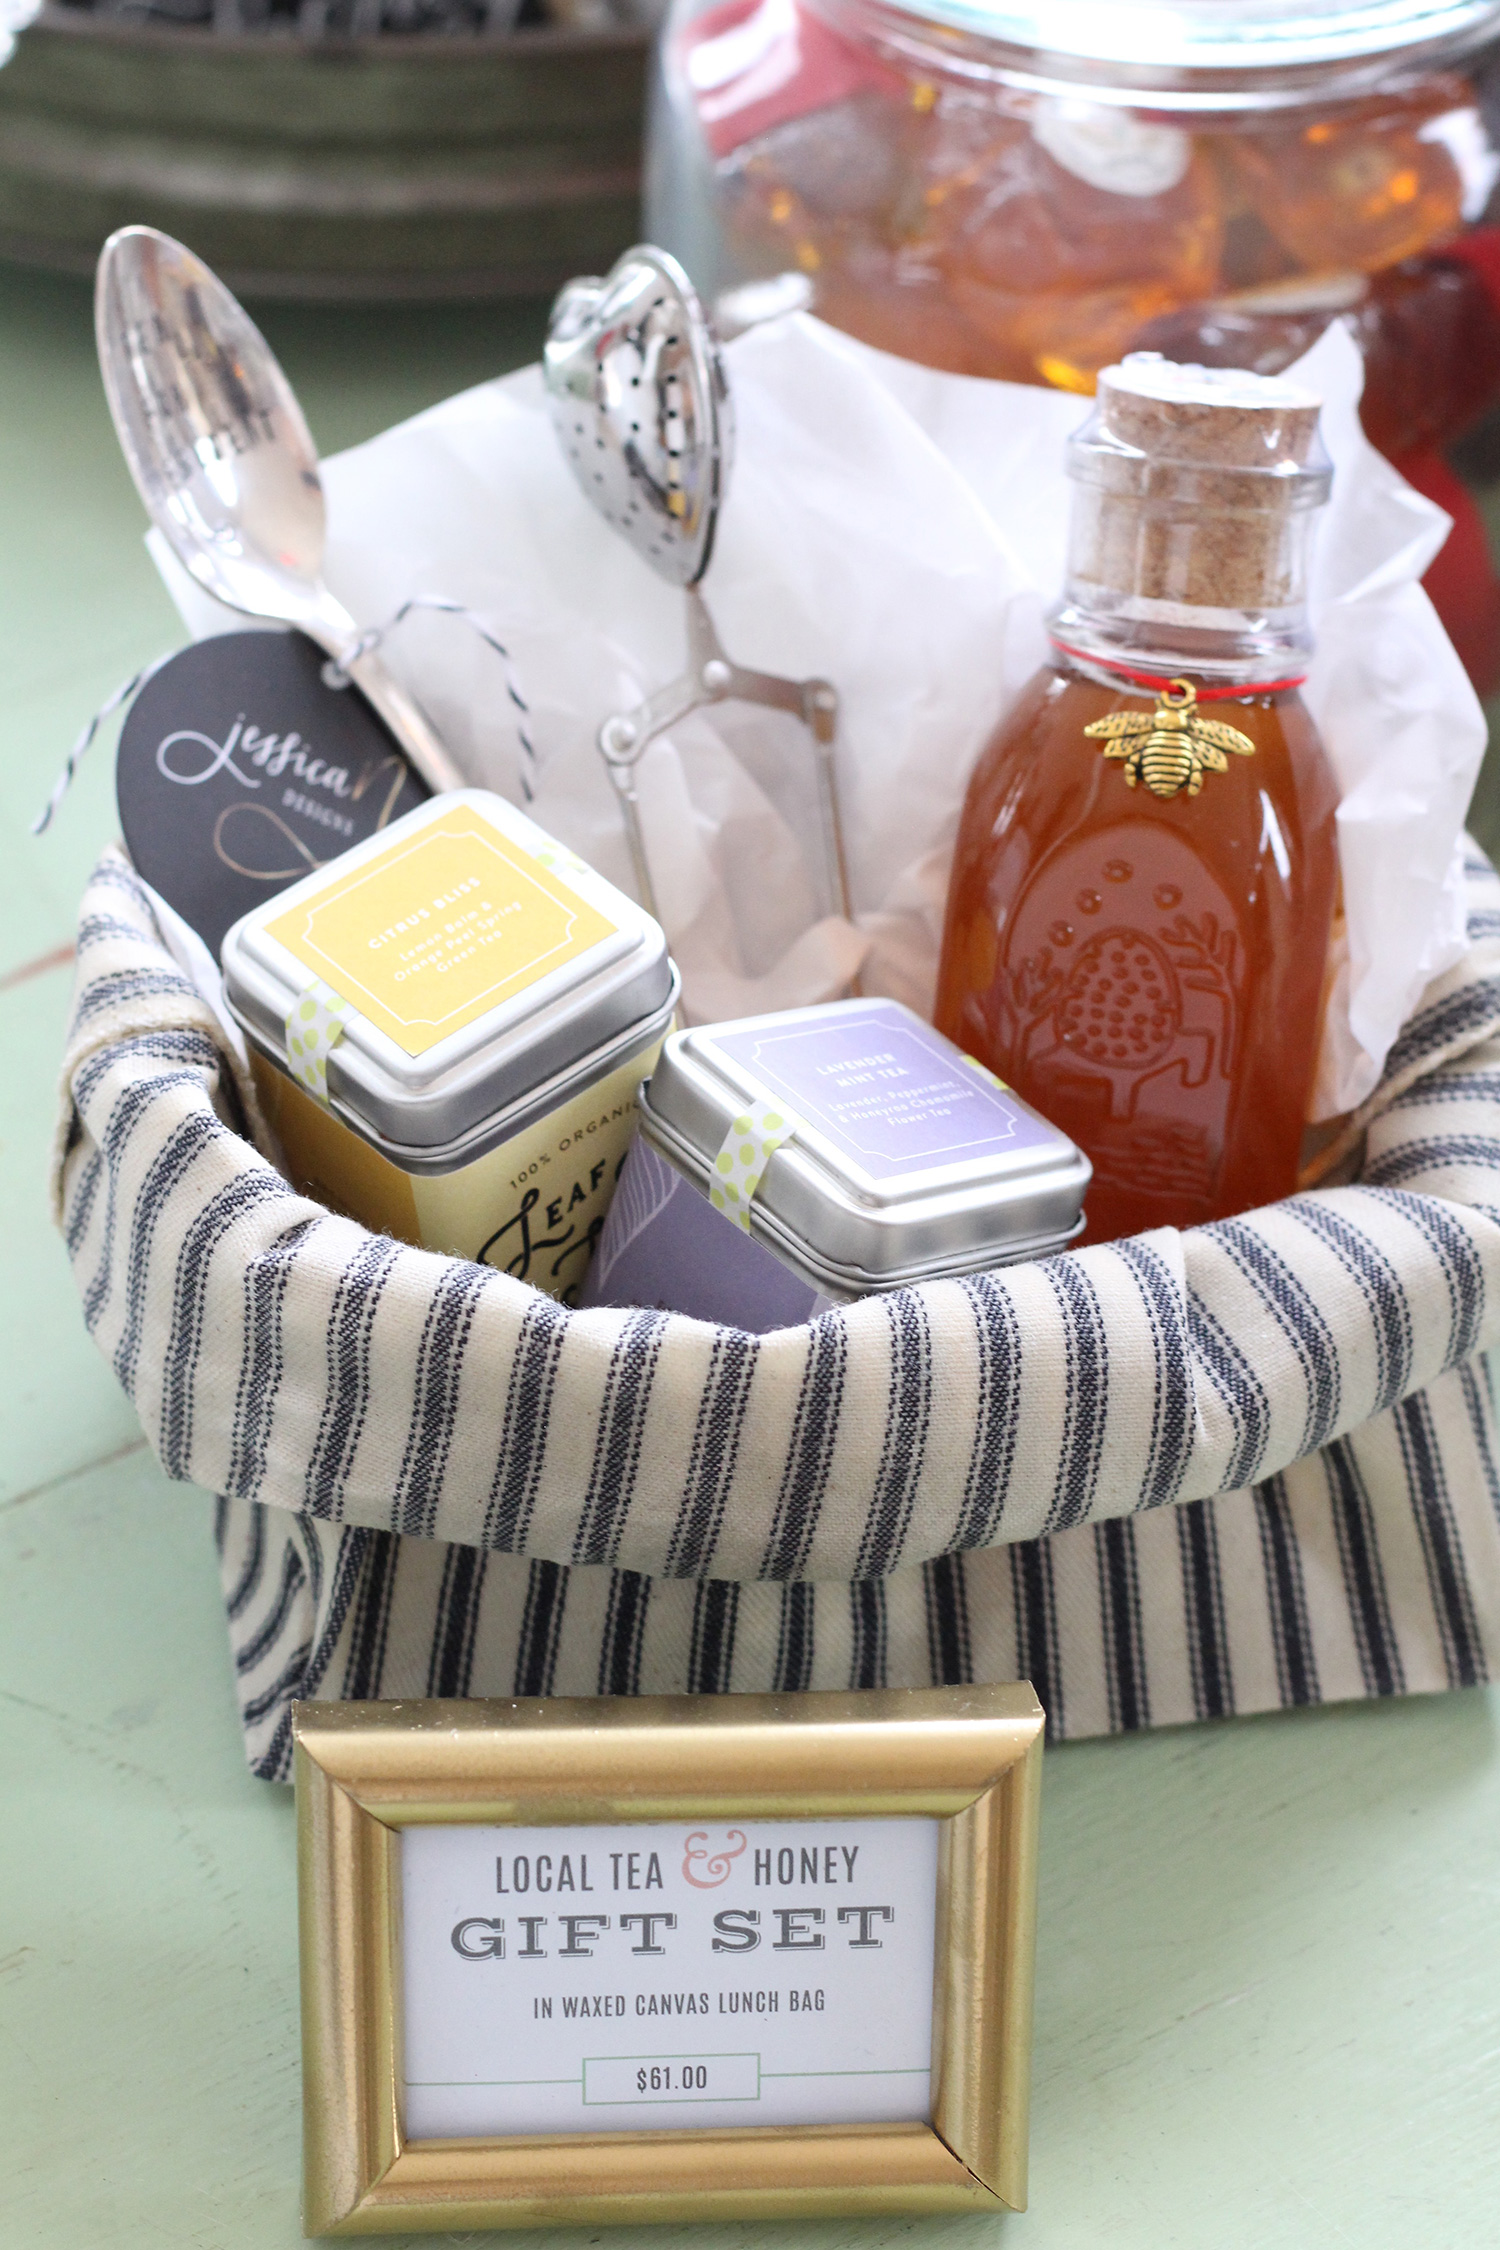 Local tea and honey gift set 